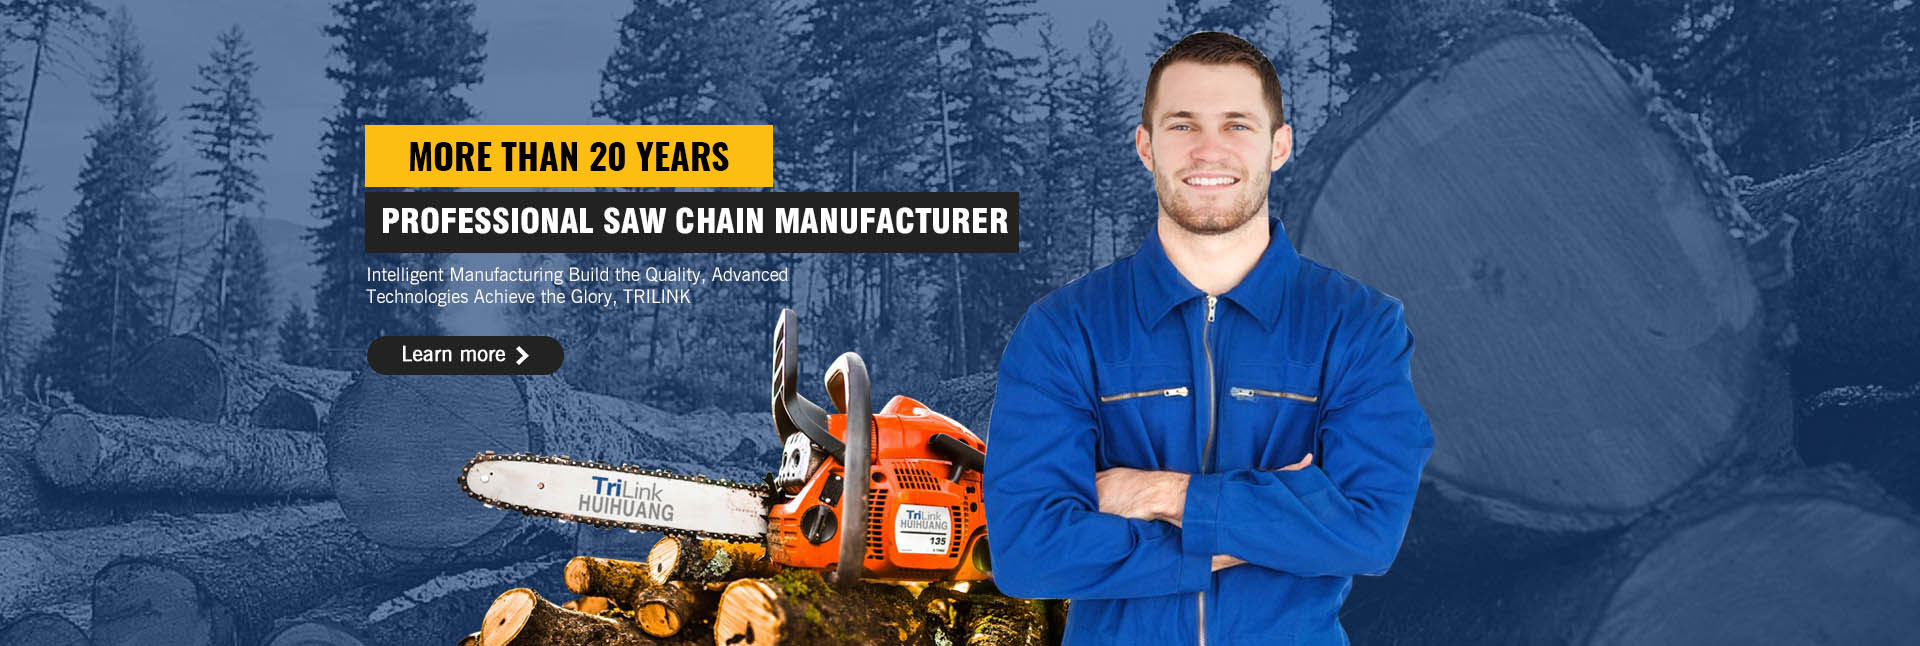 saw chain sharpener manufacturer